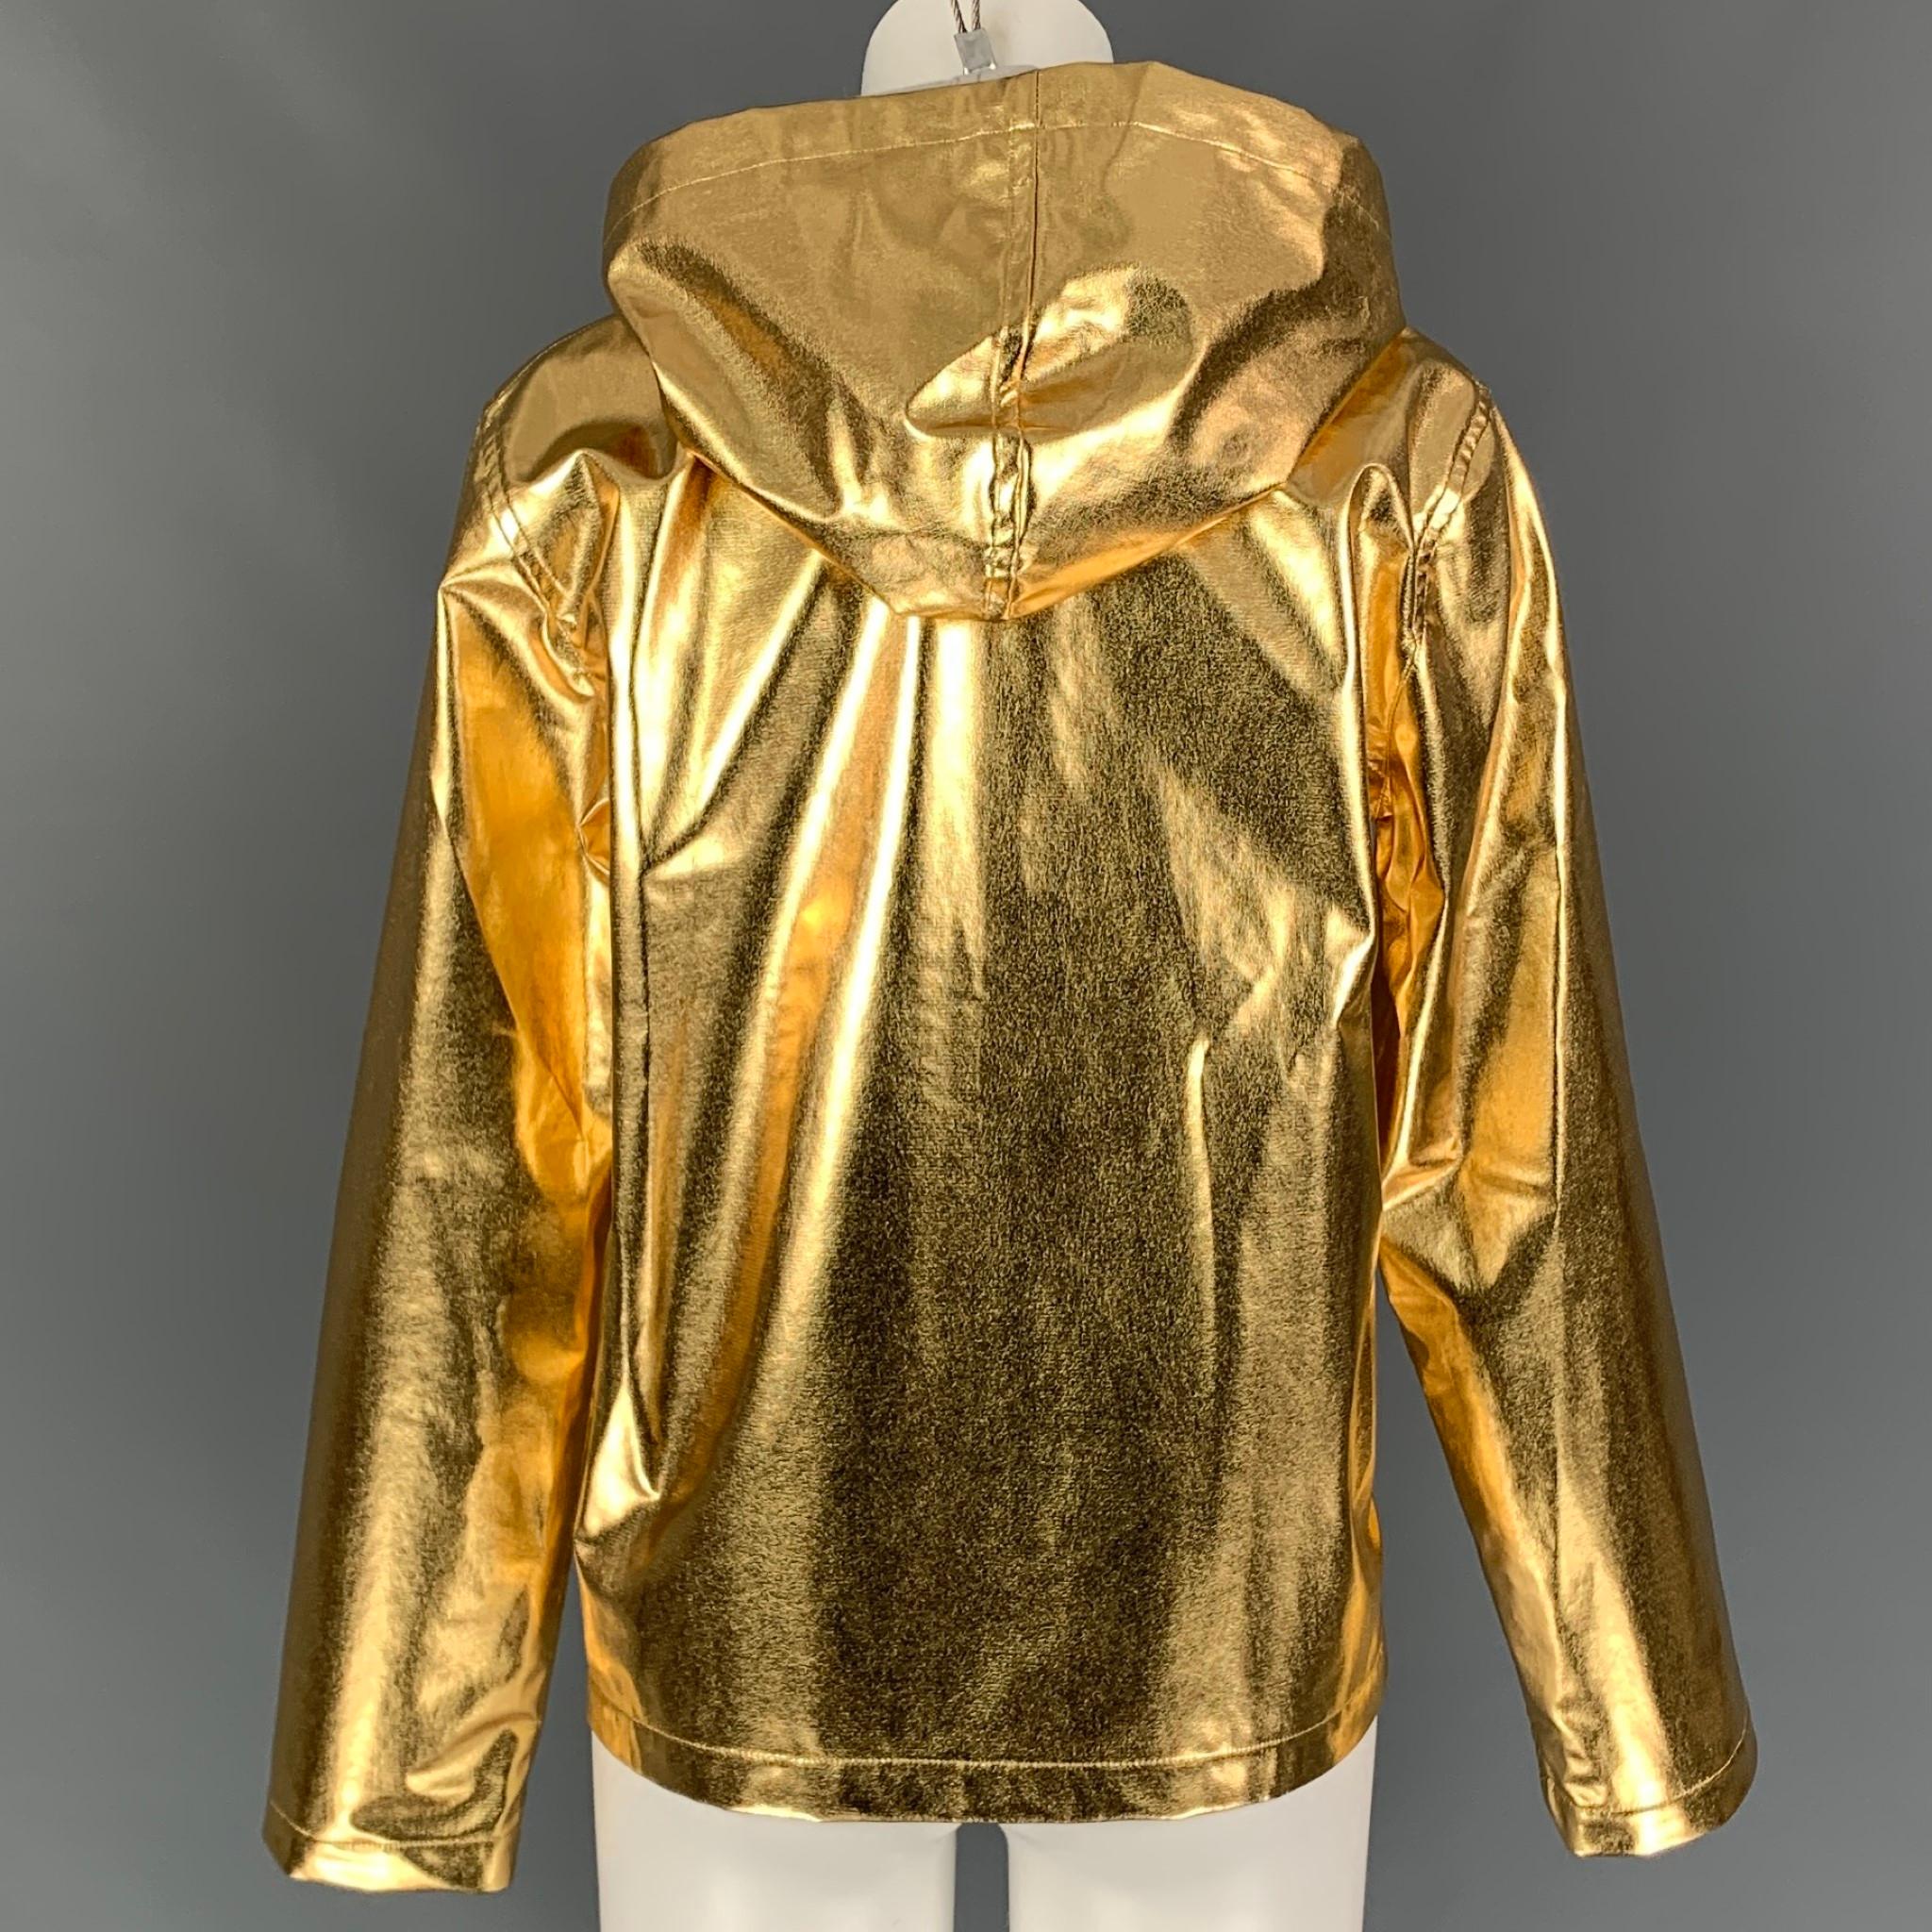 metallic gold jacket women's